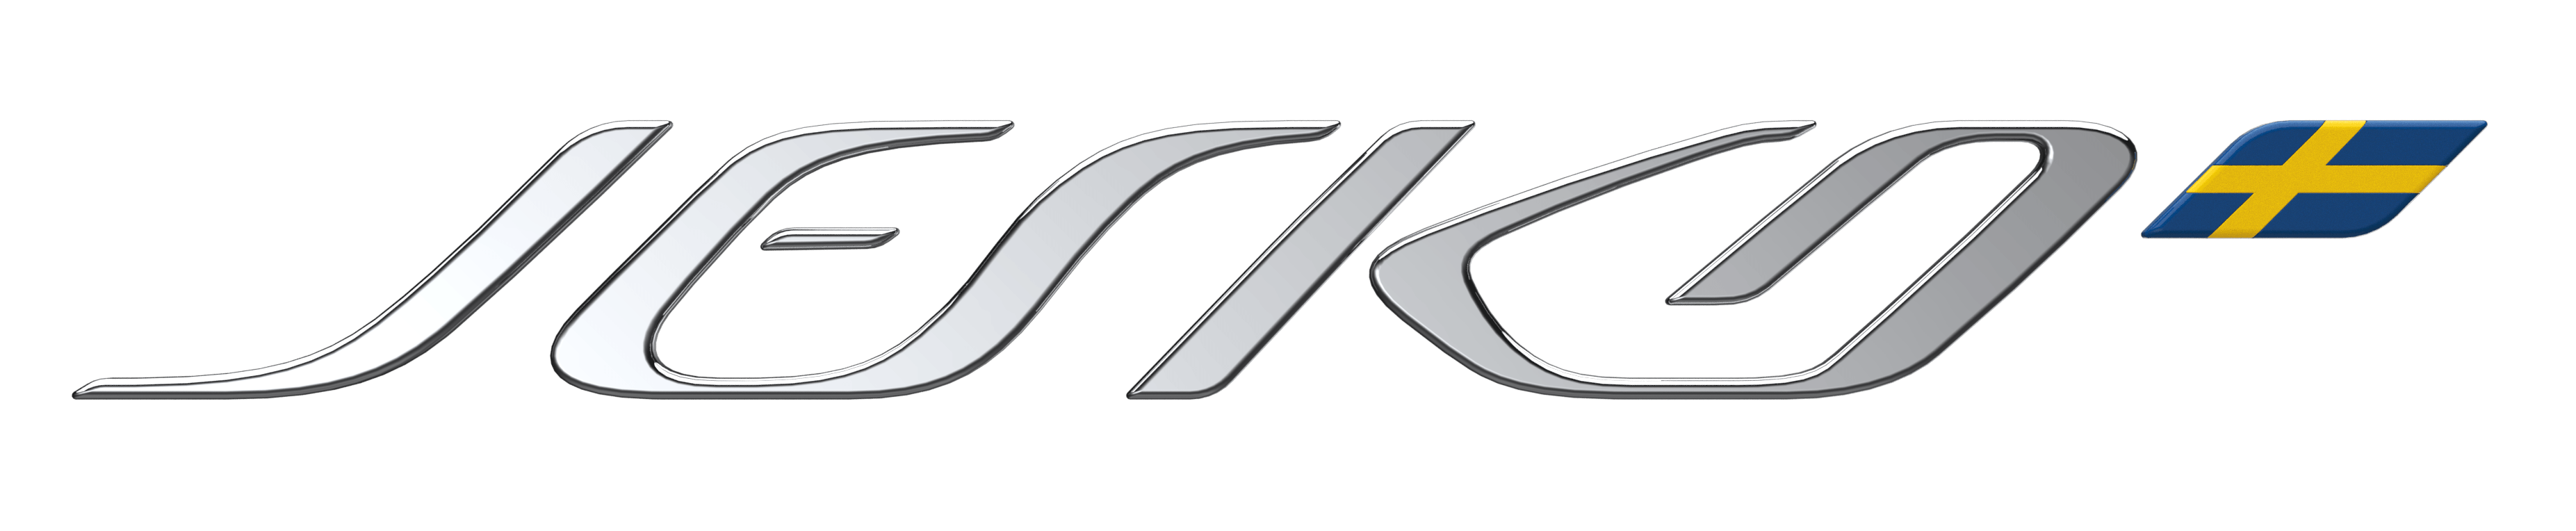 Konesigg Logo - Home - Koenigsegg